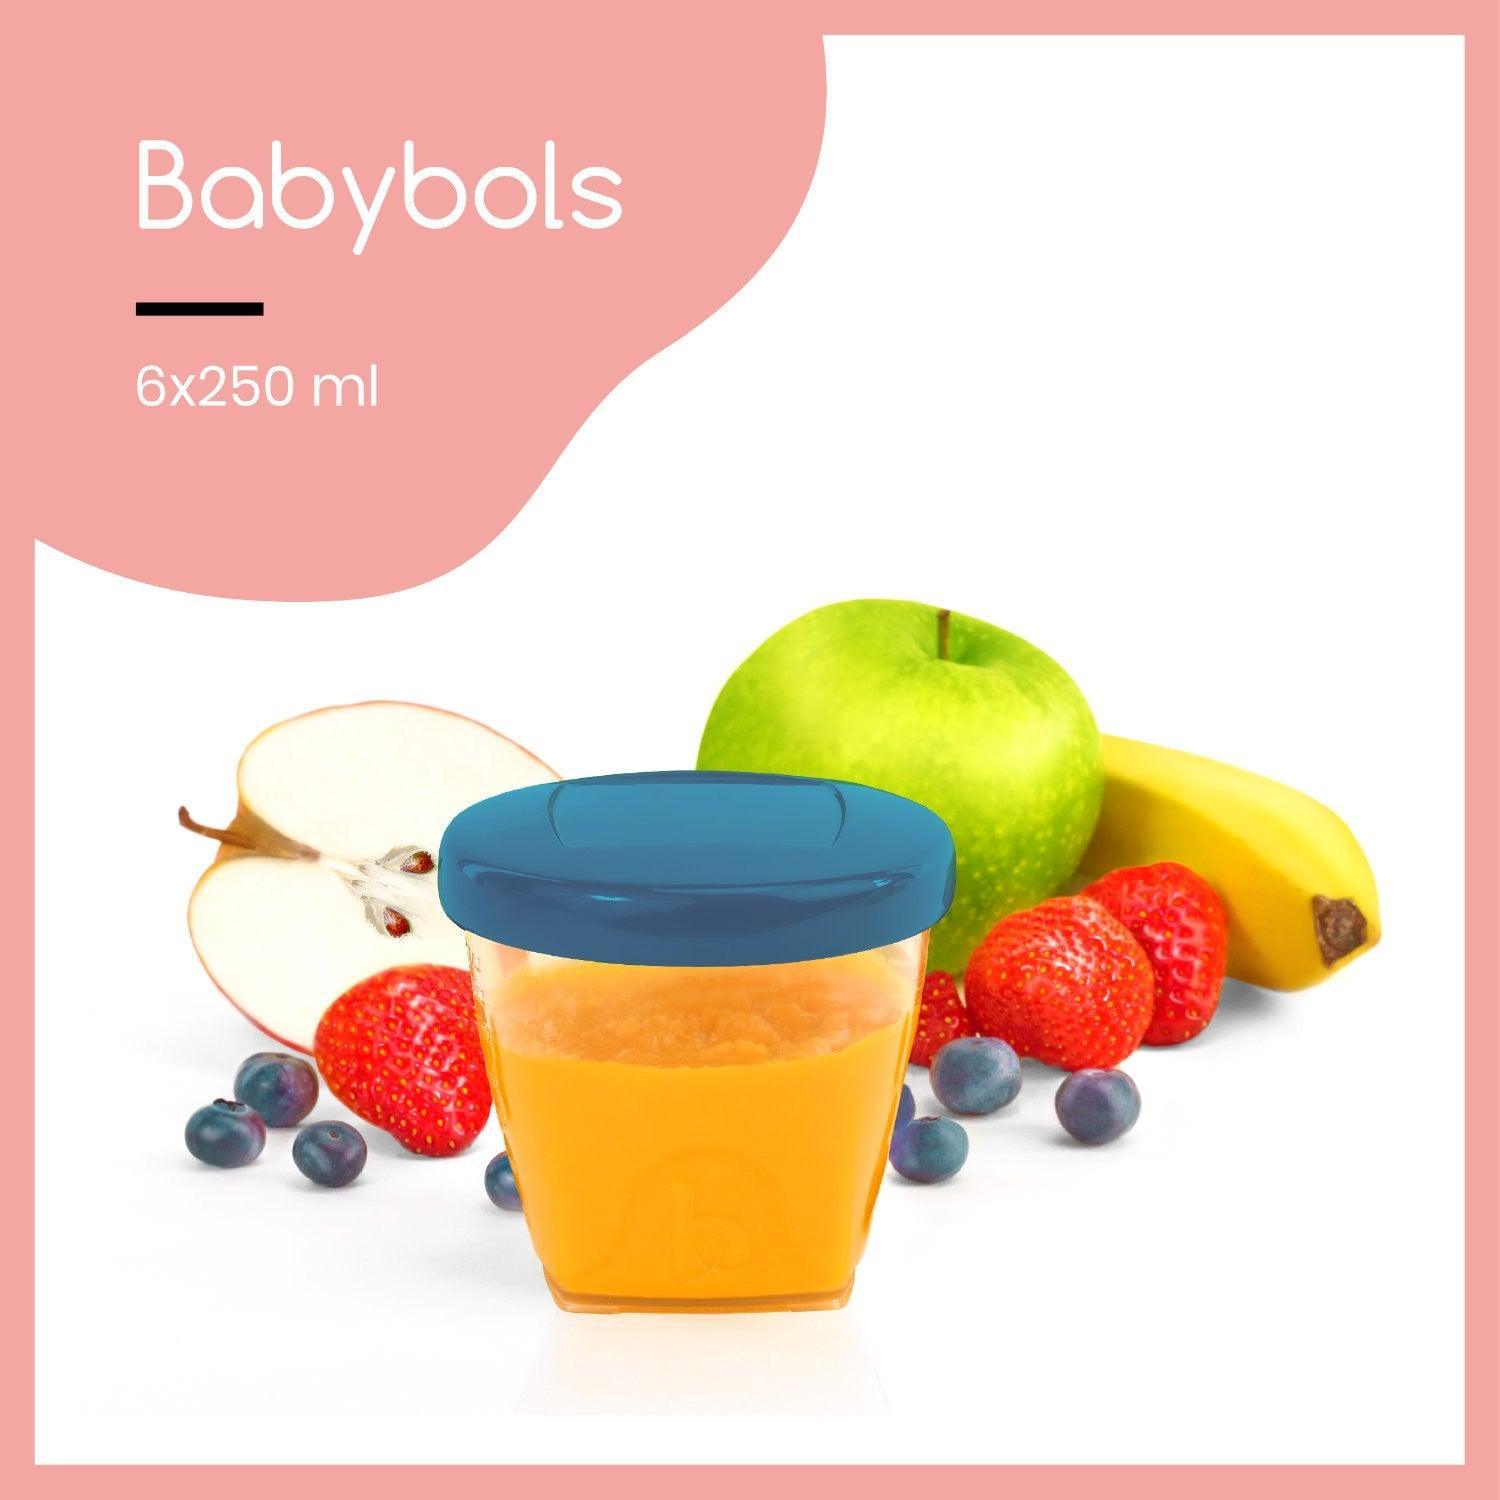 Babymoov - Babybols - Food Containers 250ml x 6 - Mari Kali Stores Cyprus